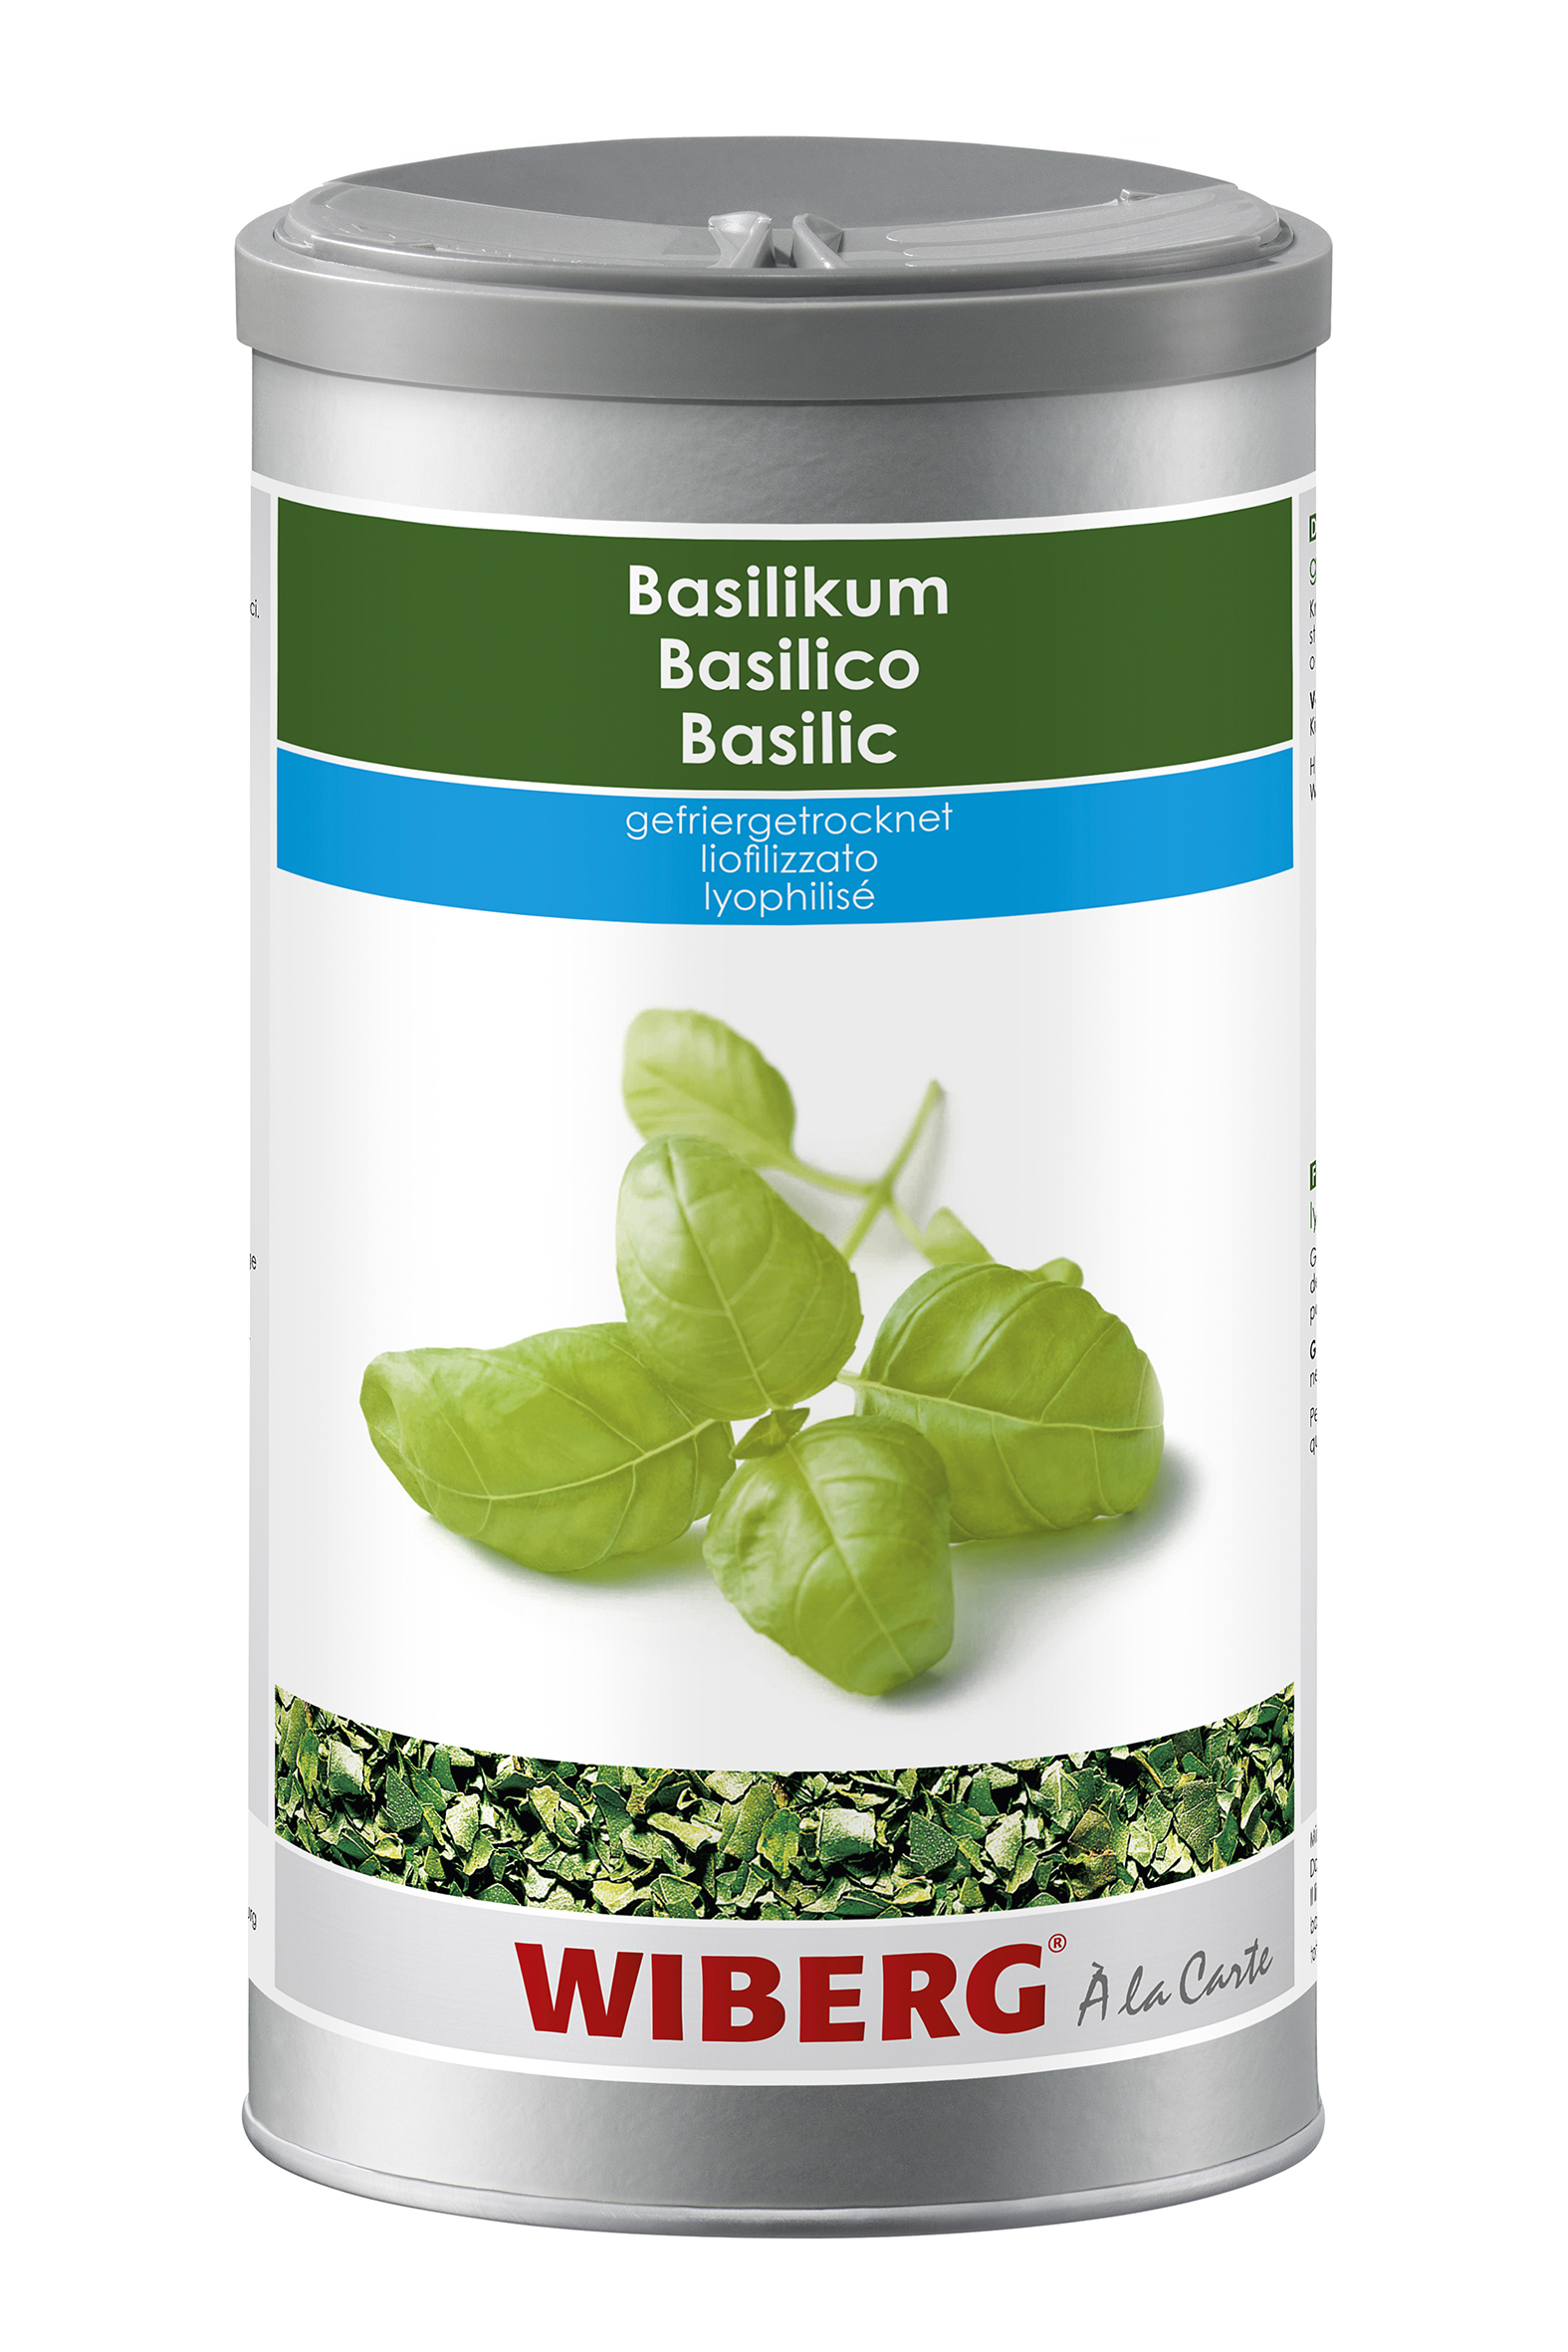 Basilikum gefriergetrocknet (55 g) 1200 ml